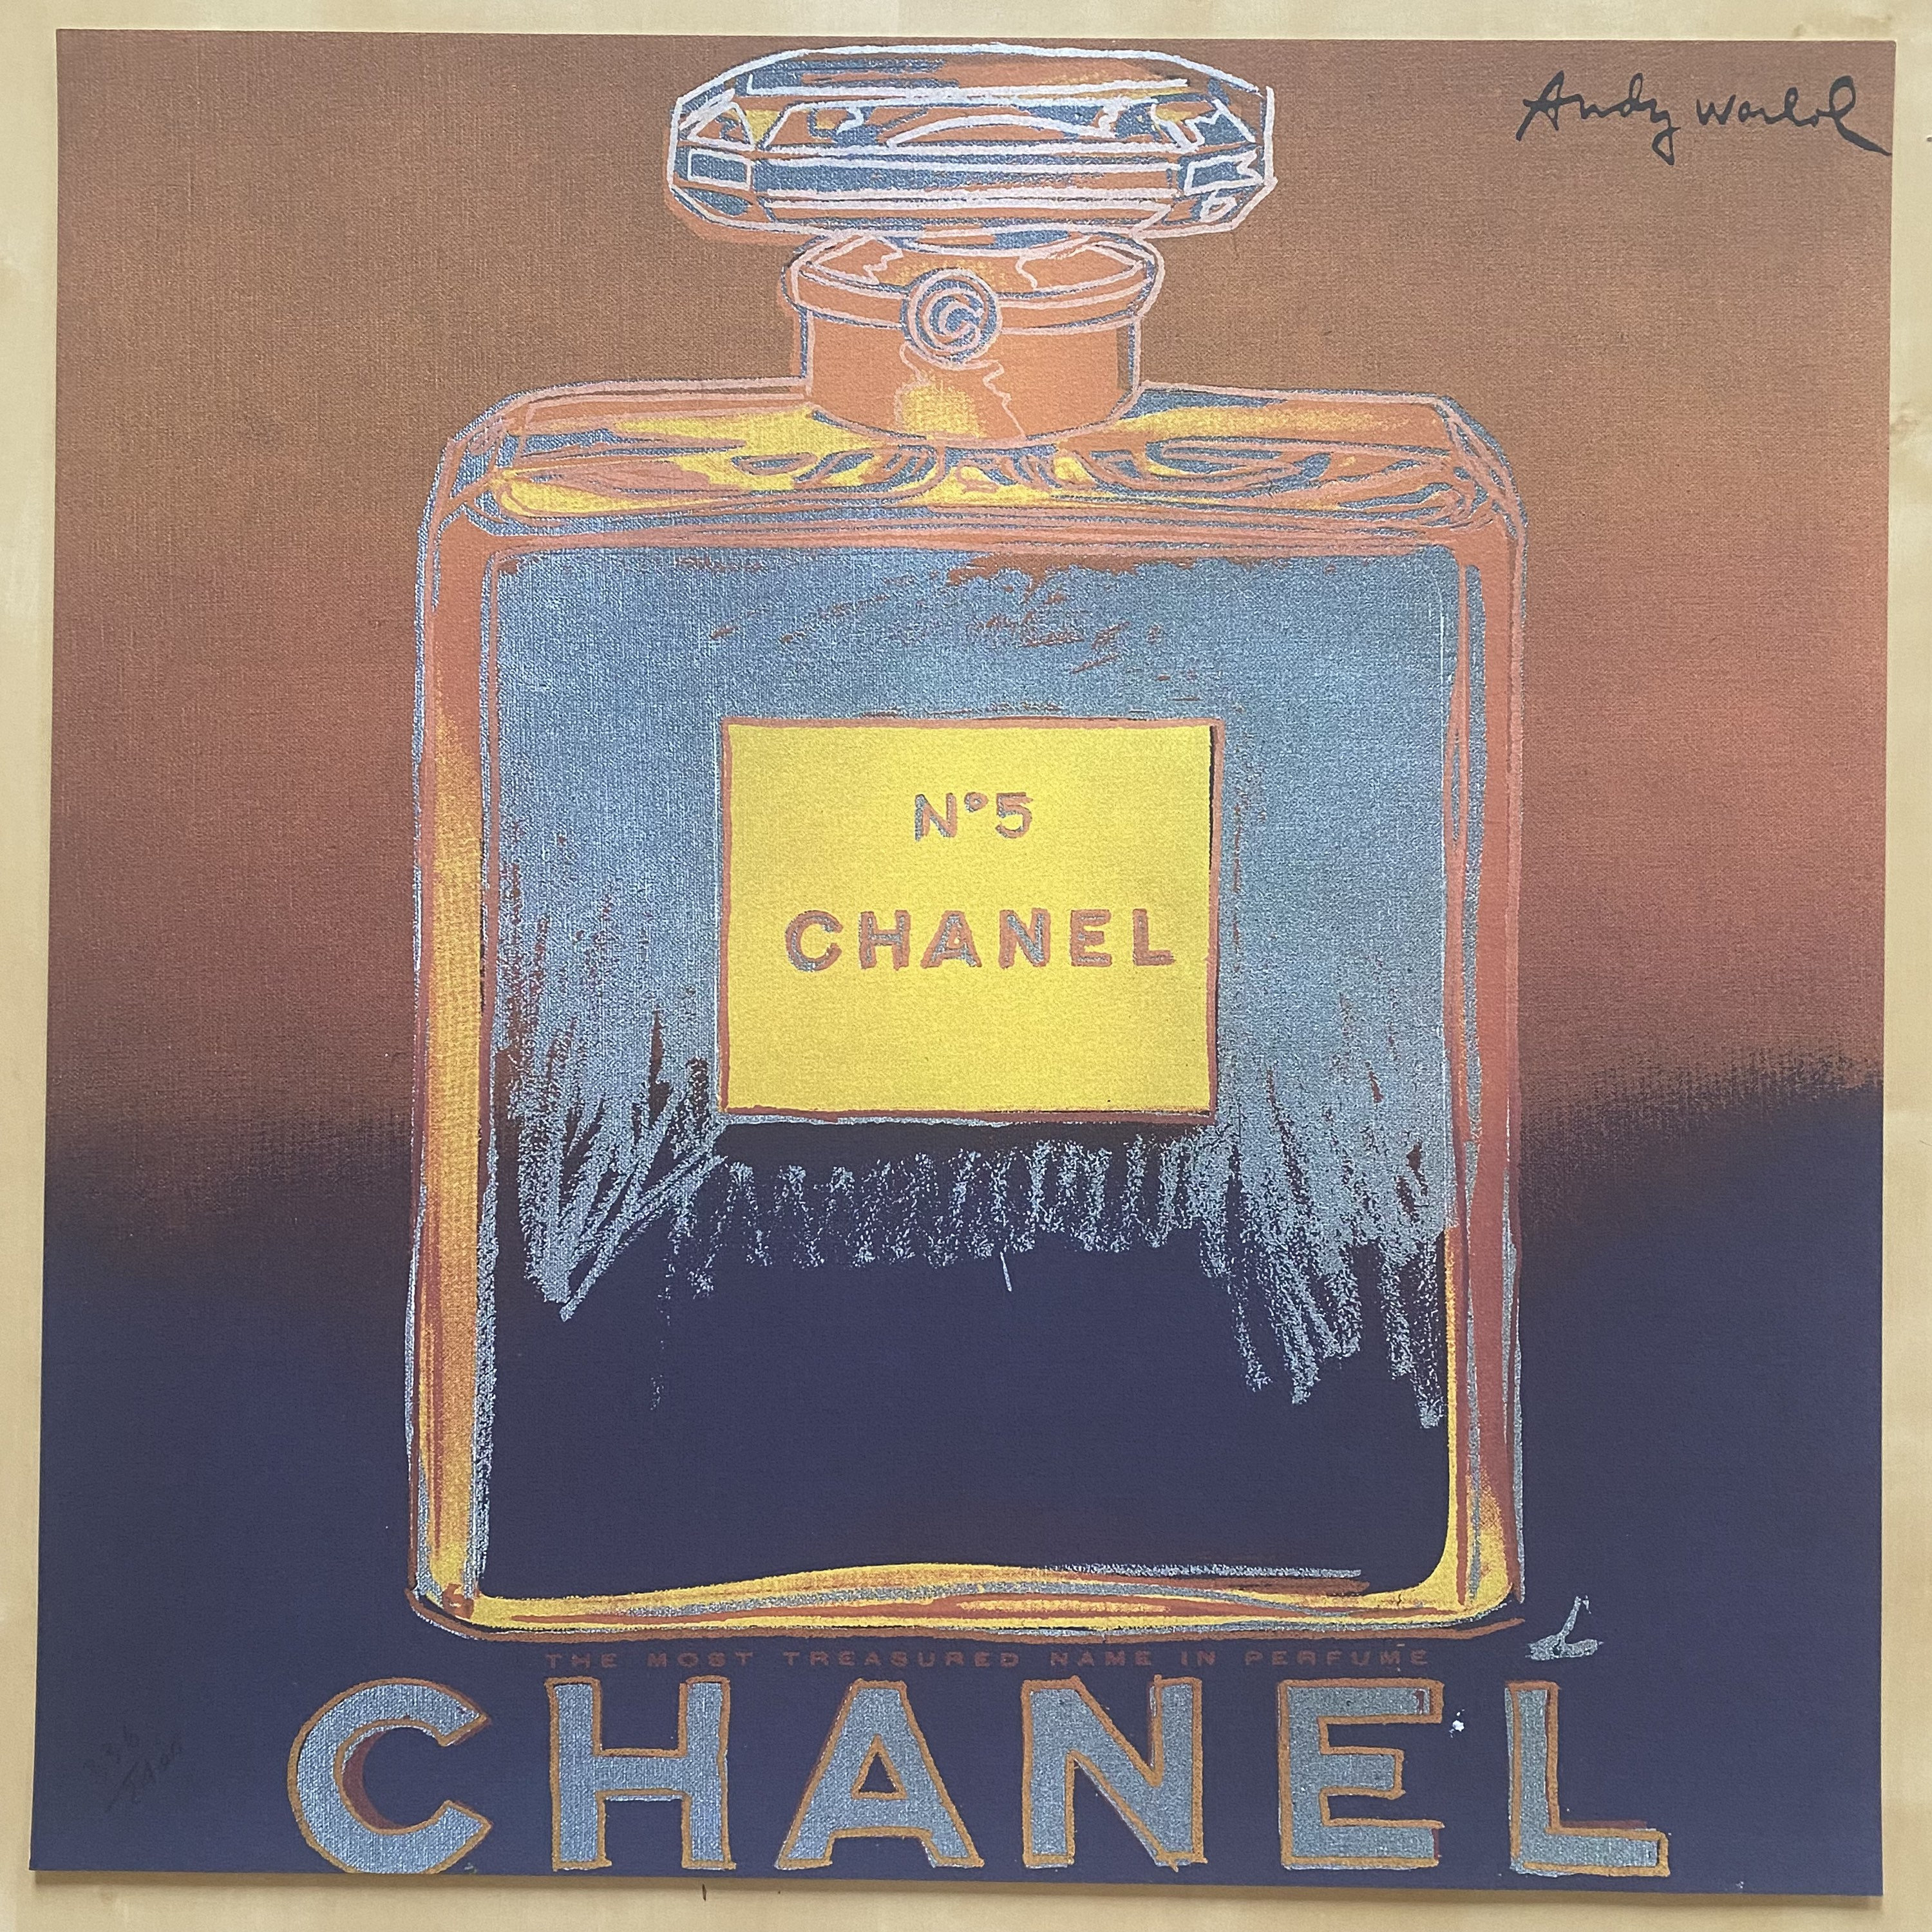 Original Vintage Chanel No. 5 Perfume Poster by Andy Warhol 1997